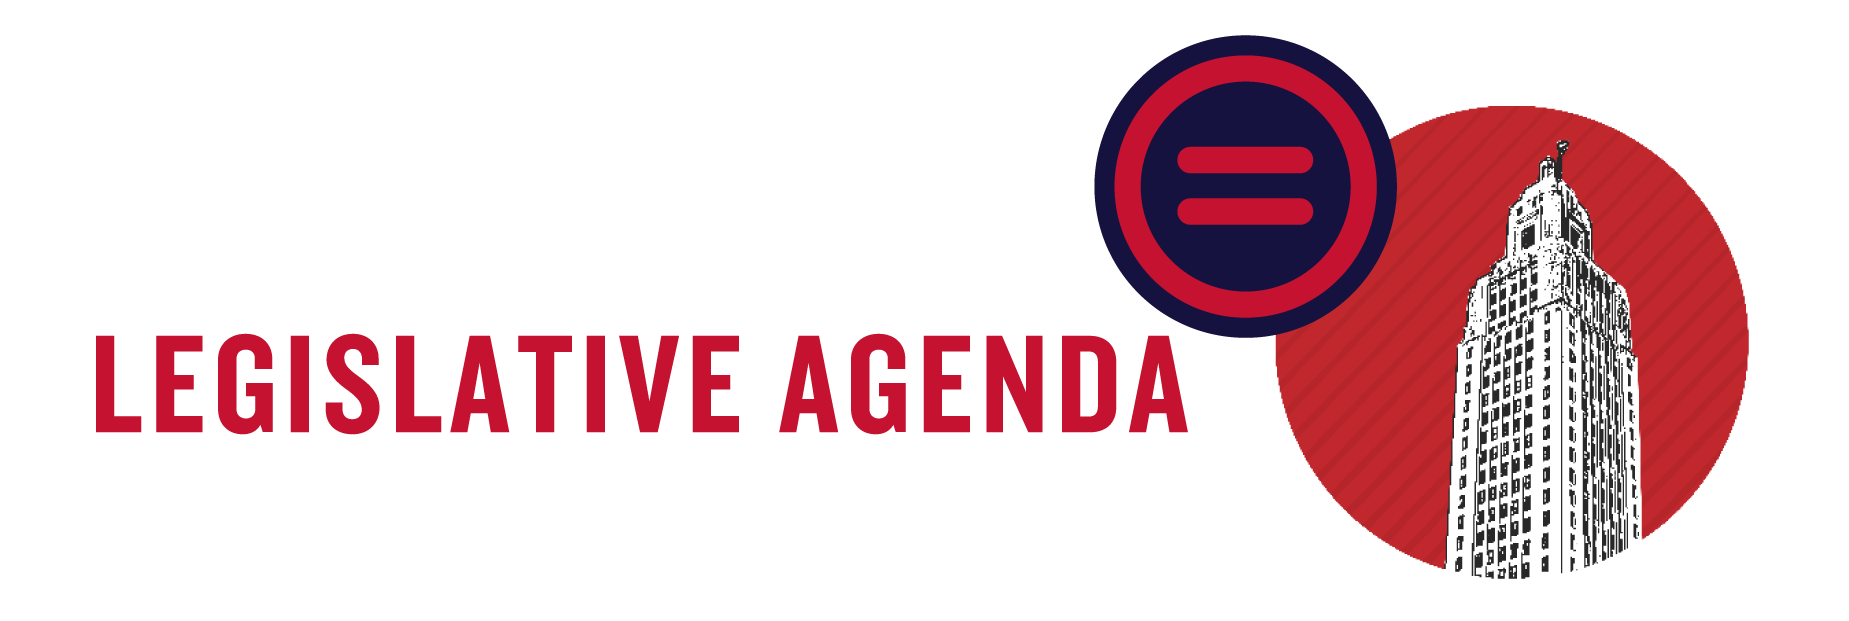 2024 Legislative Agenda Header Image